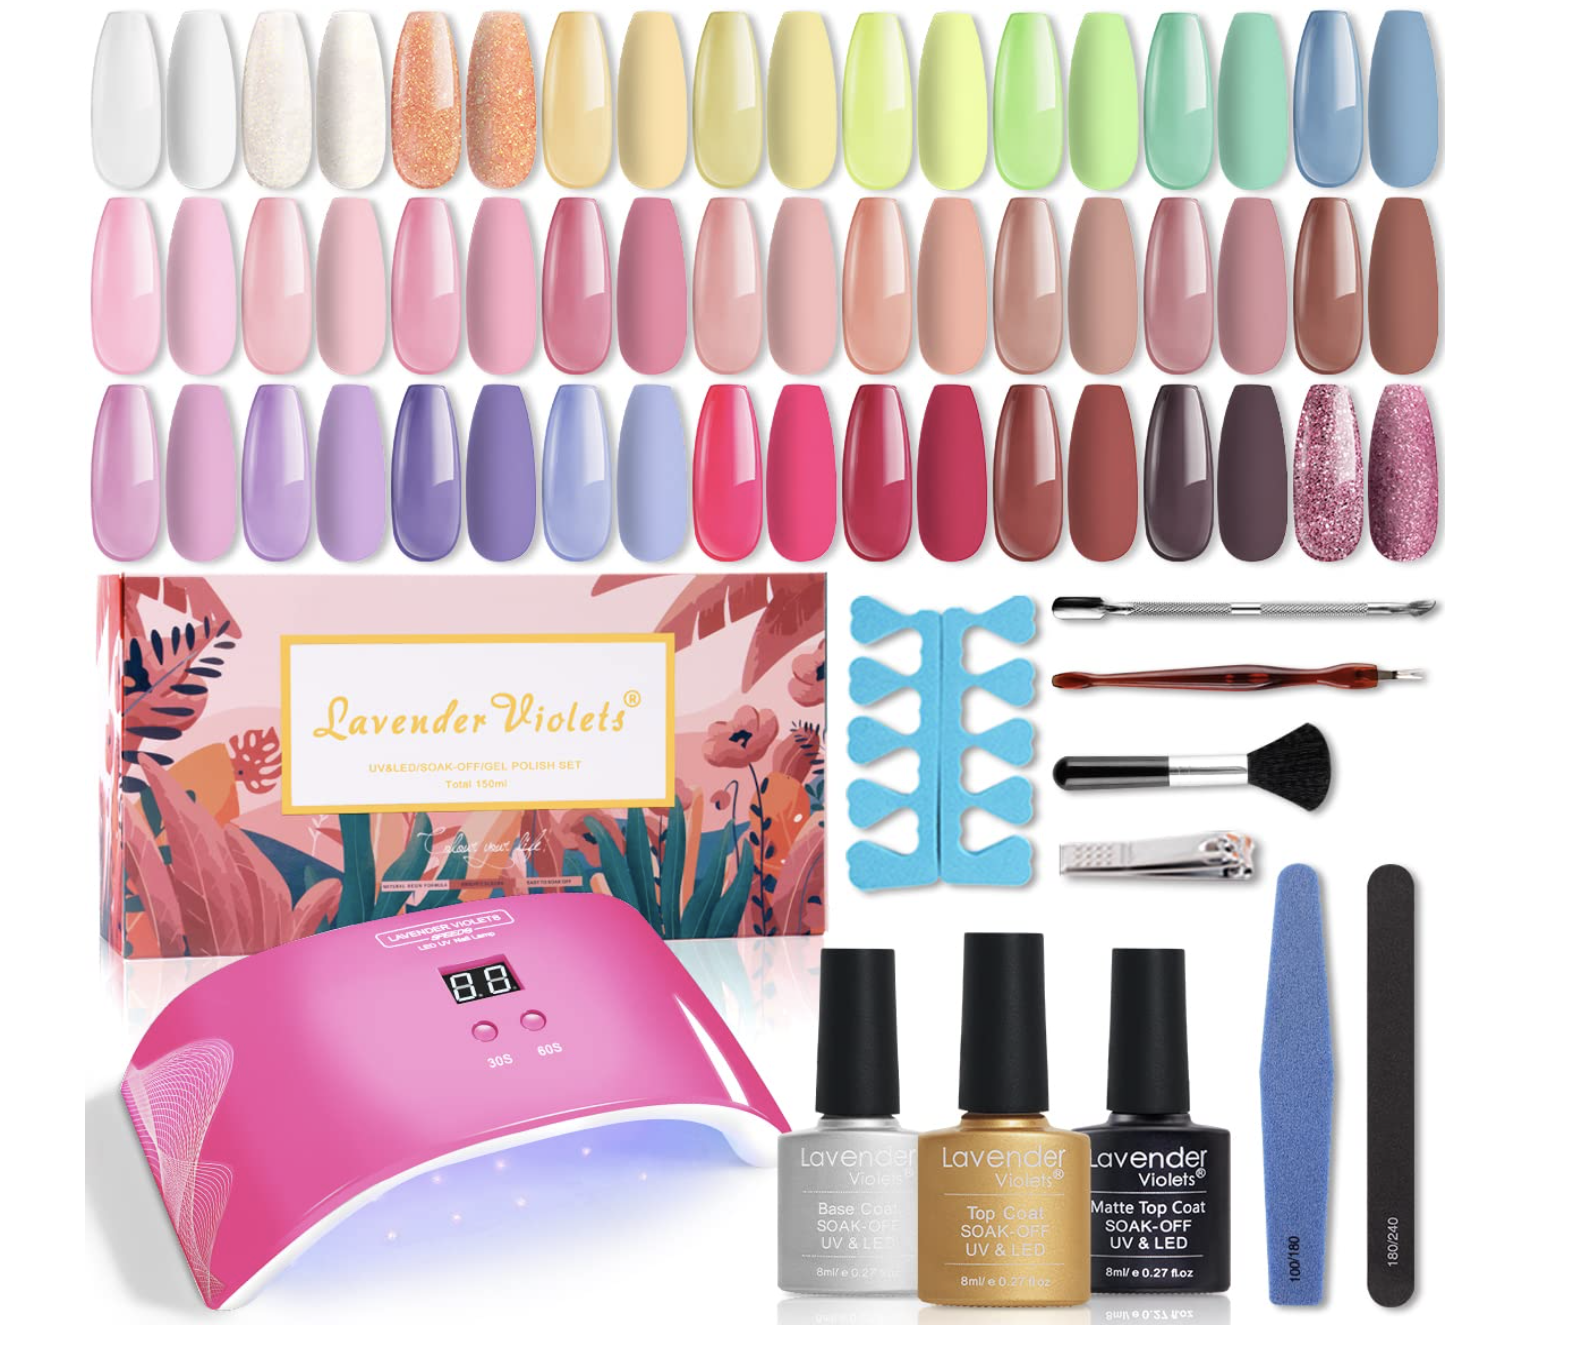 Nailene Sensationail Color Gel Polish - Reviews | MakeupAlley